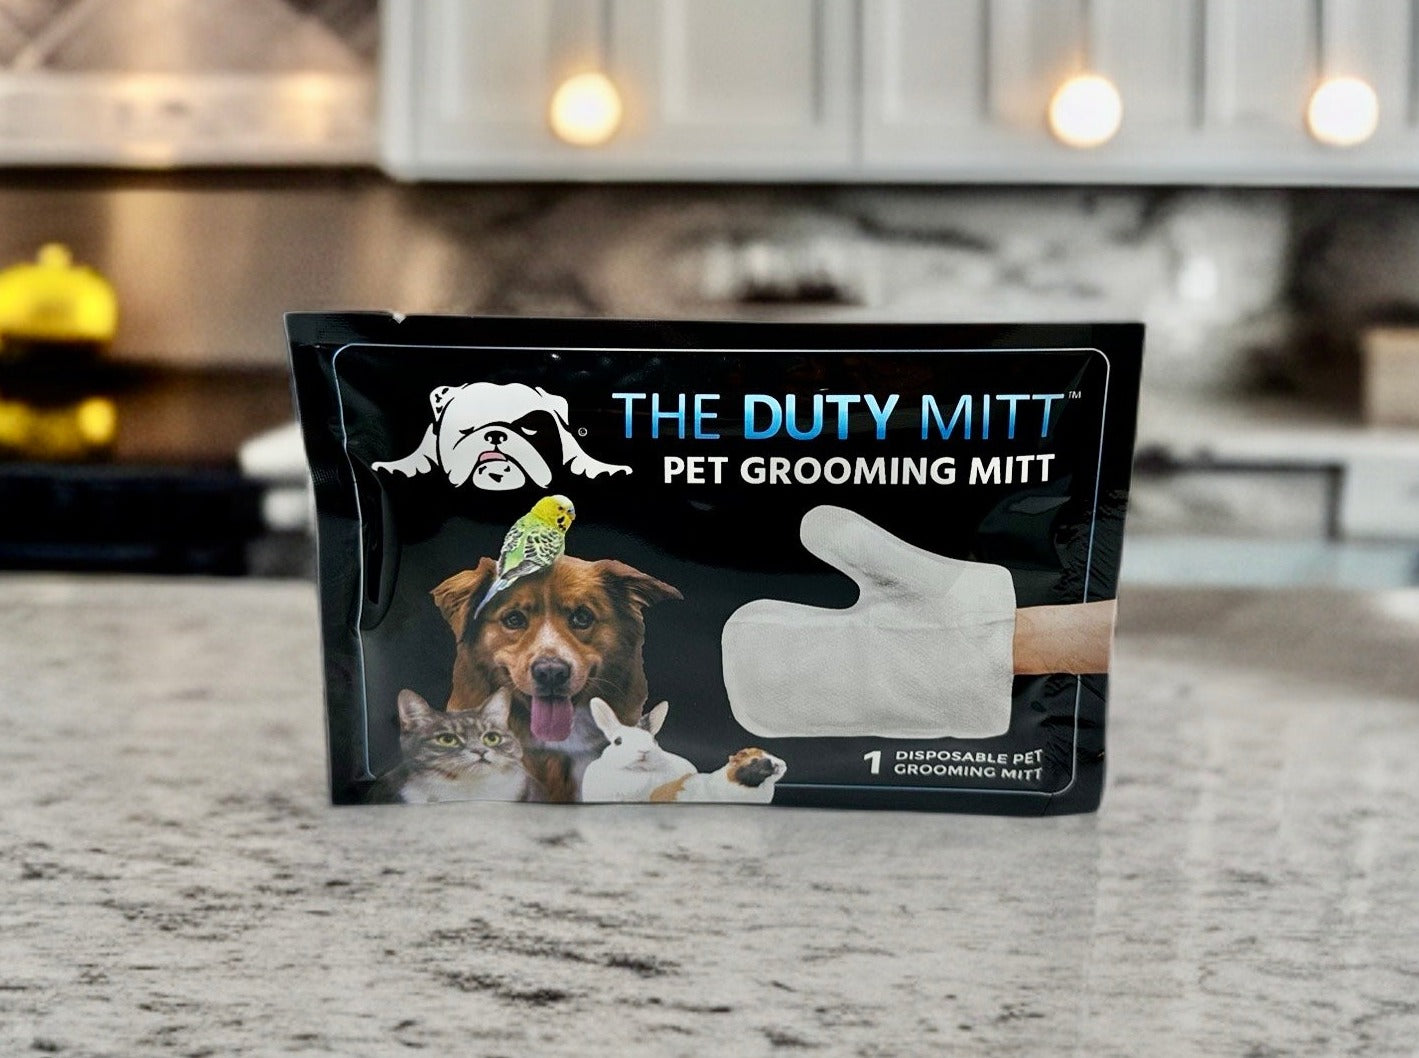 Pecute Dog Wash Mitt Bathing Grooming Gloves